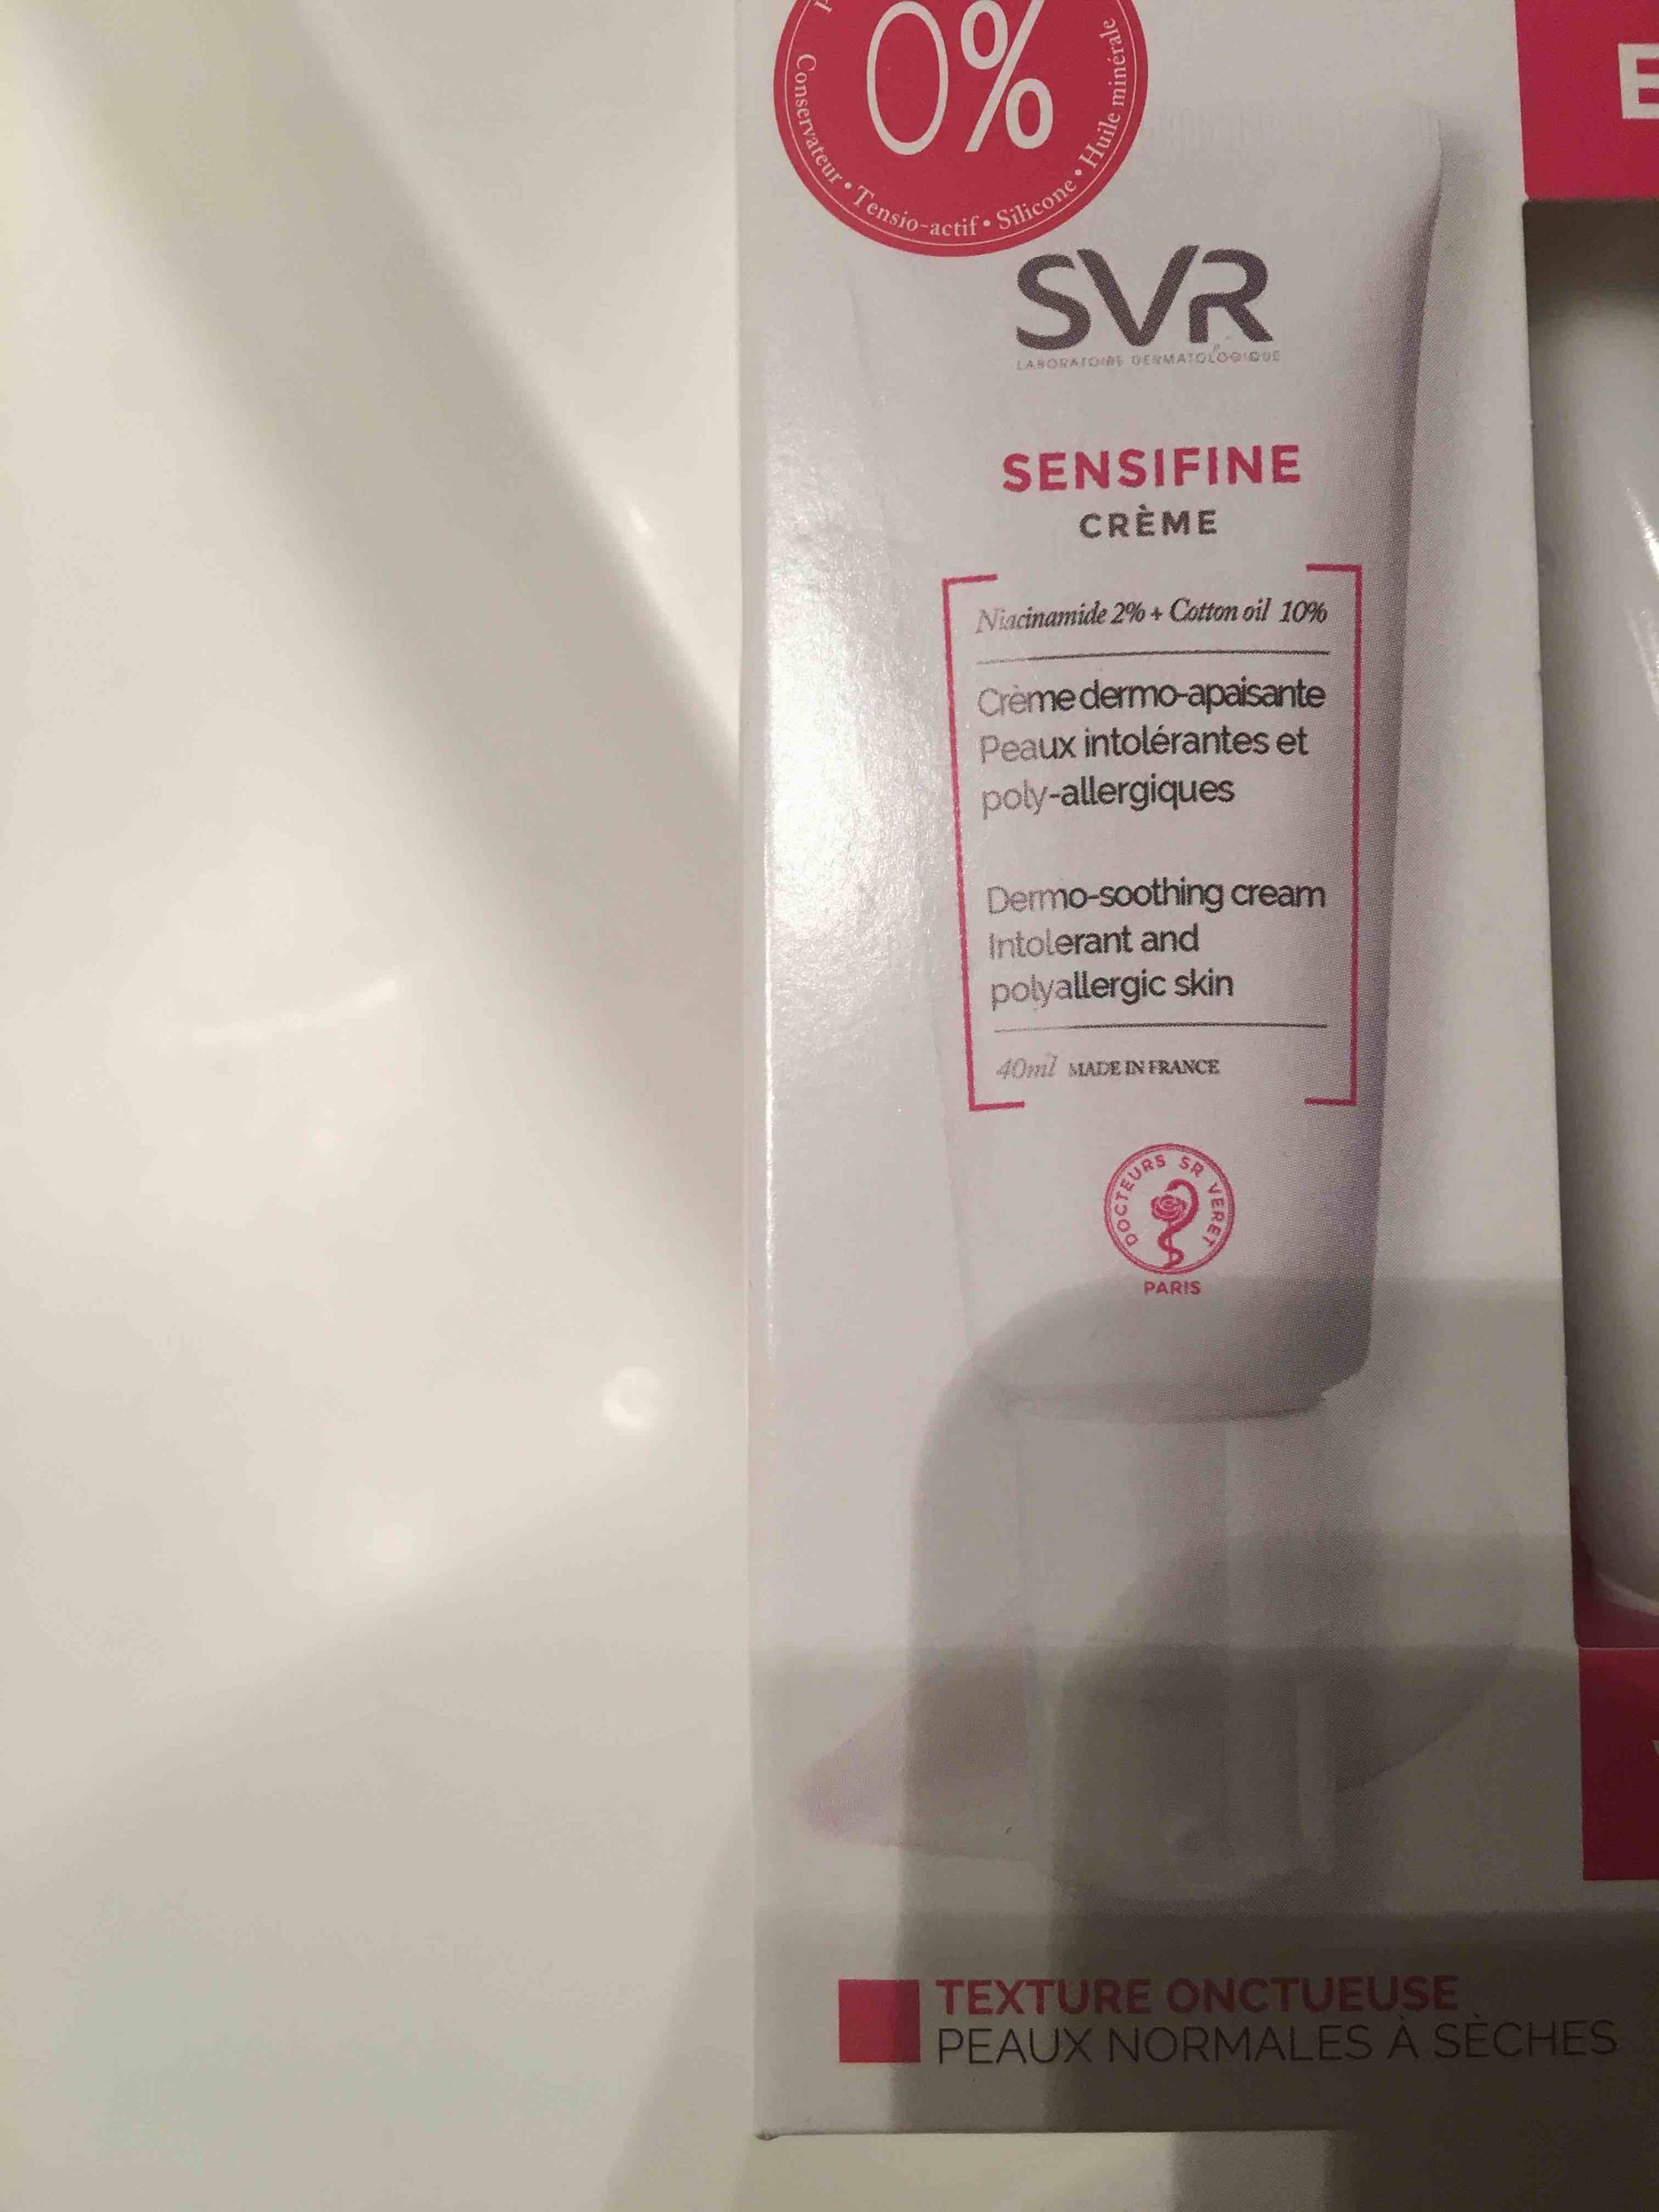 SVR - Sensifine - Crème 